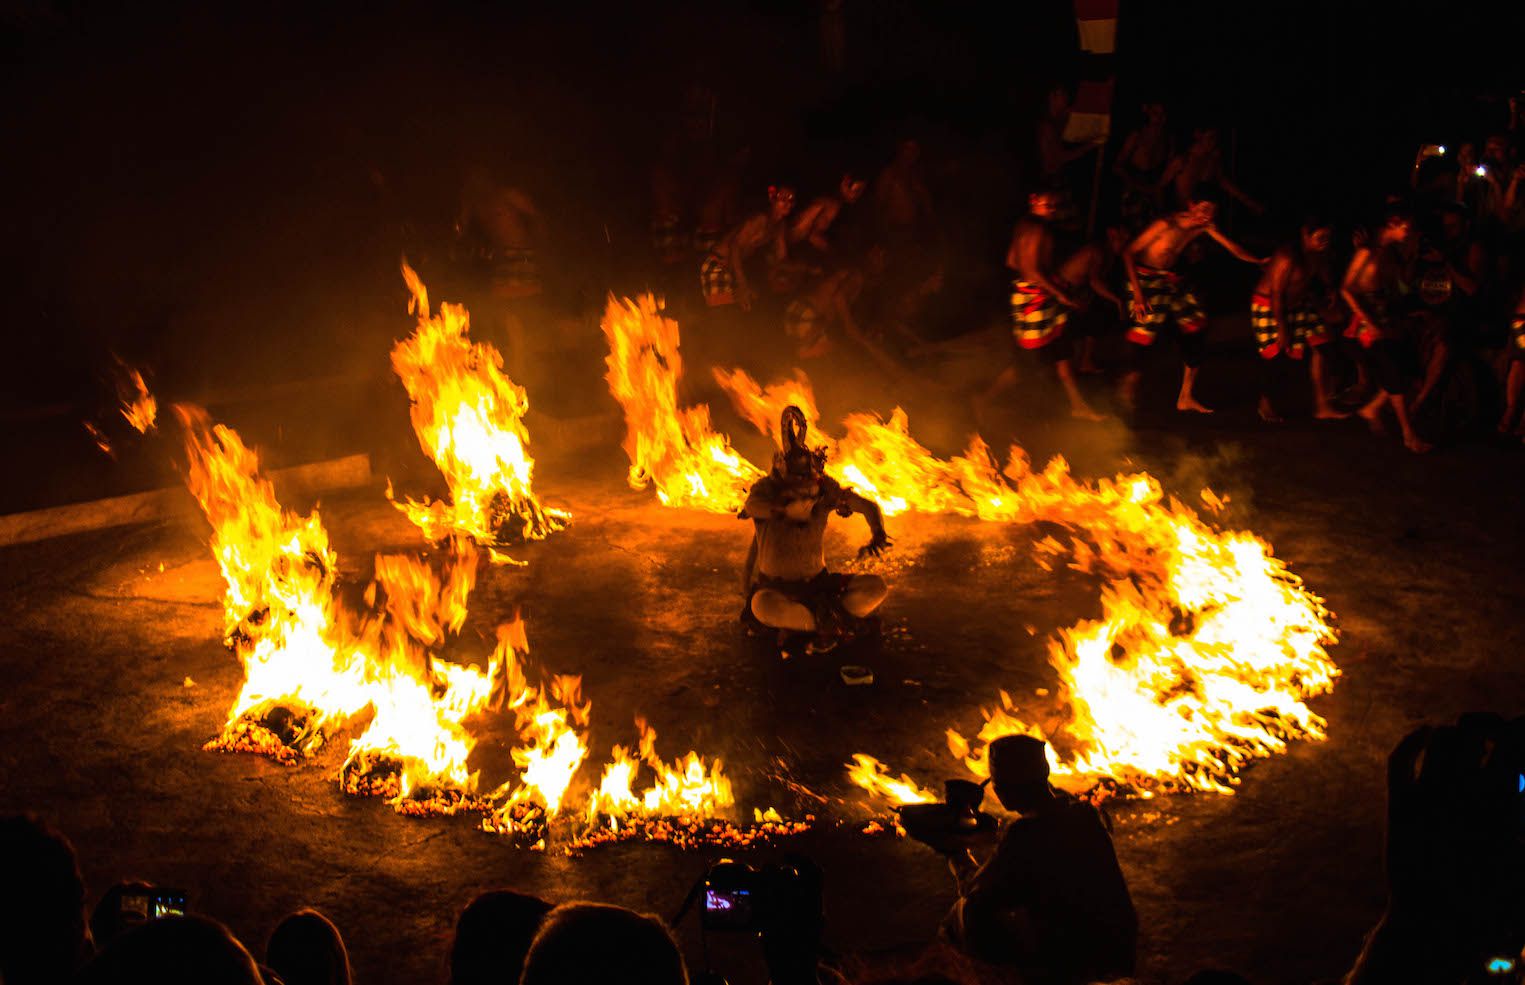 Playing with fire, Kecak dance at Uluwatu, Bali, Indonesia